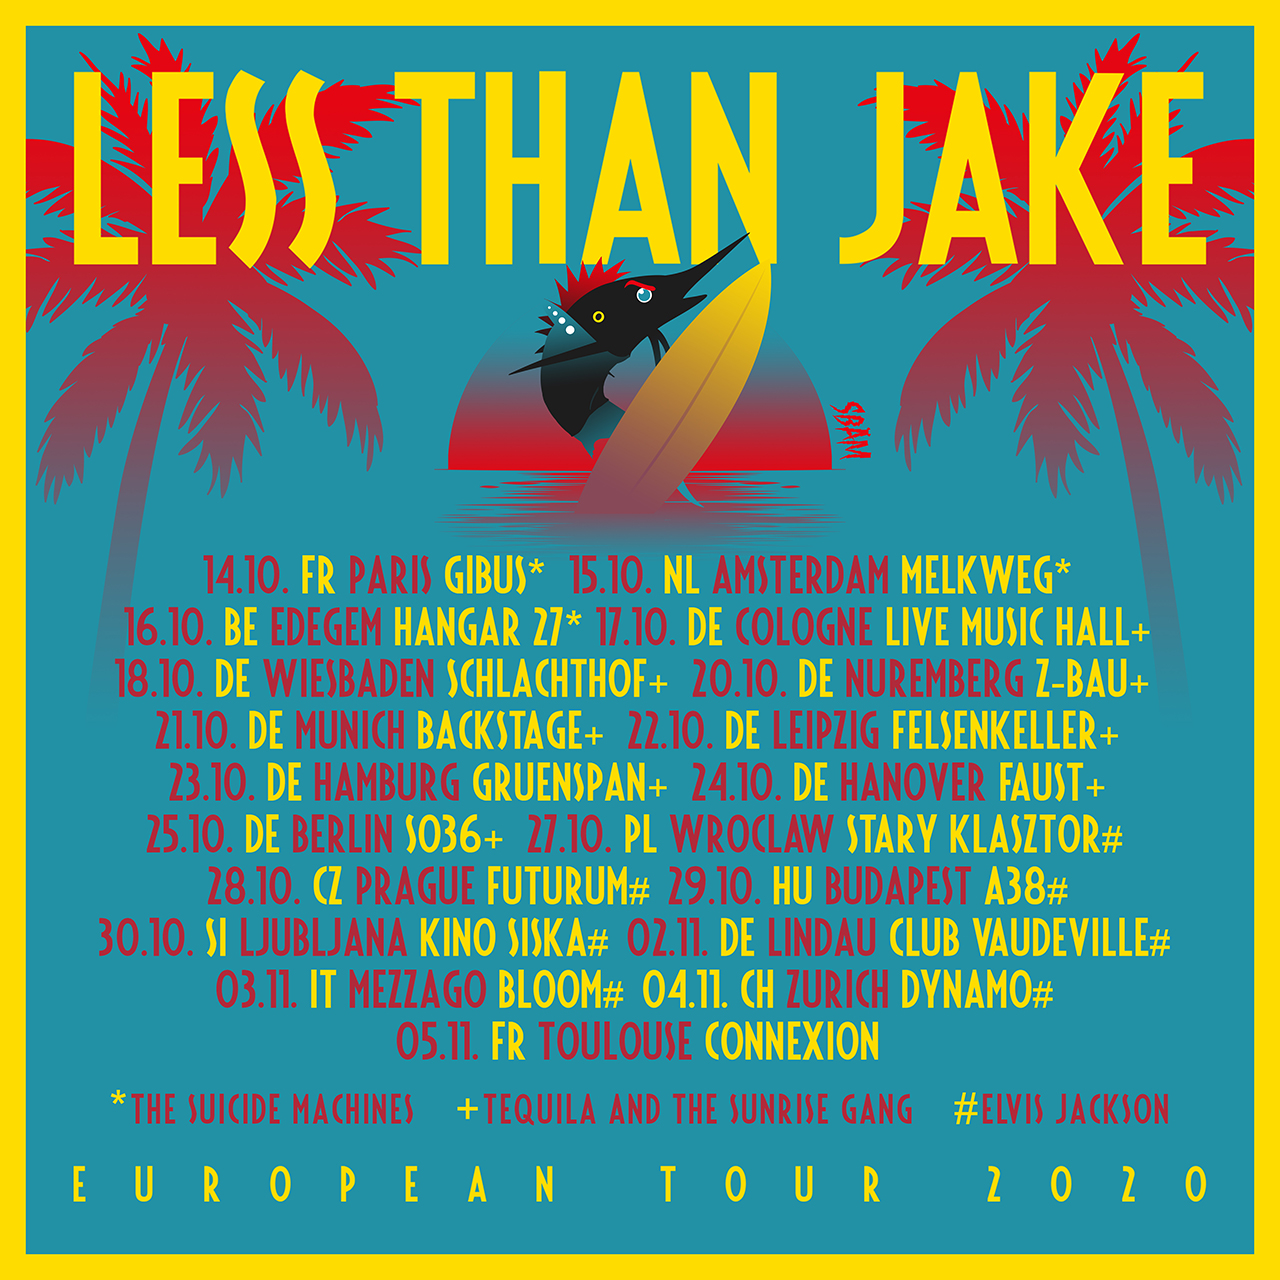 Less tahn Jake | 2020 European Tour Dates